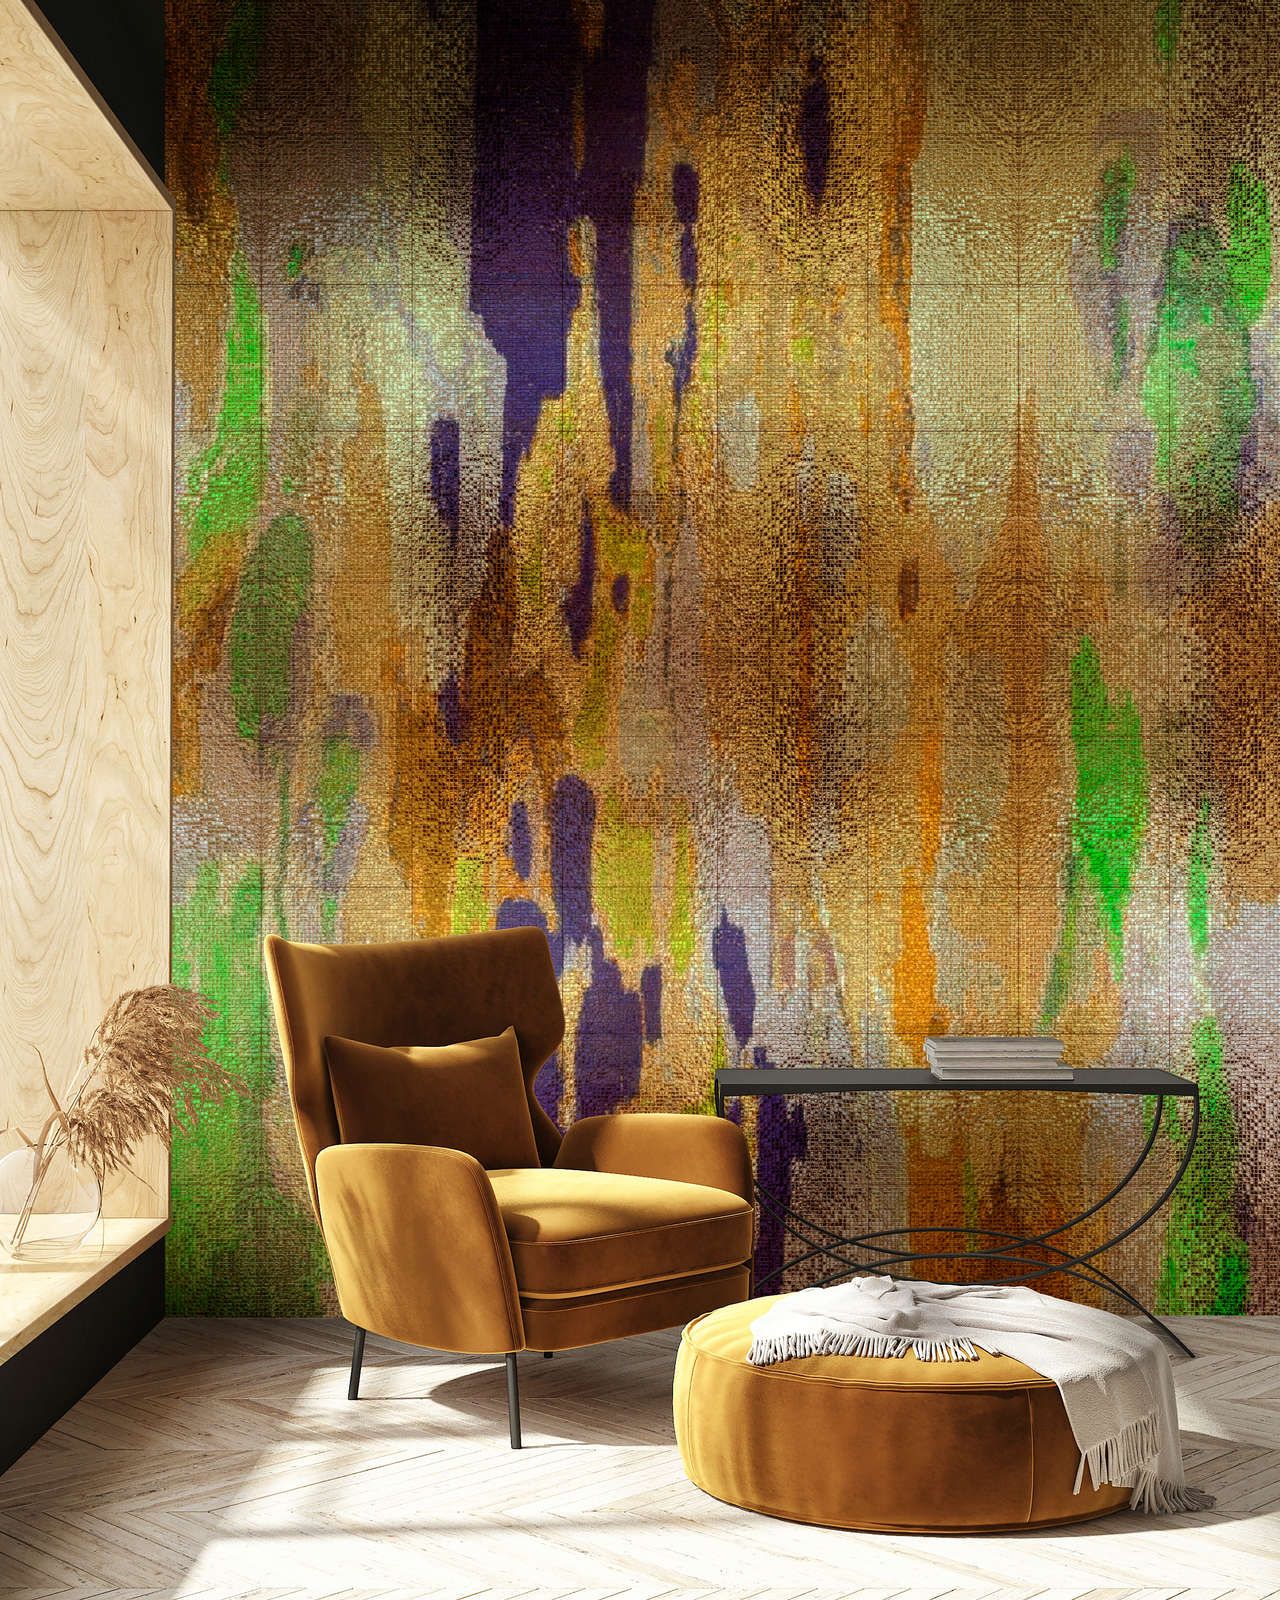             Digital behang »marielle 1« - kleurovergangen paars, goud, groen met mozaïekstructuur - mat, glad vlies
        